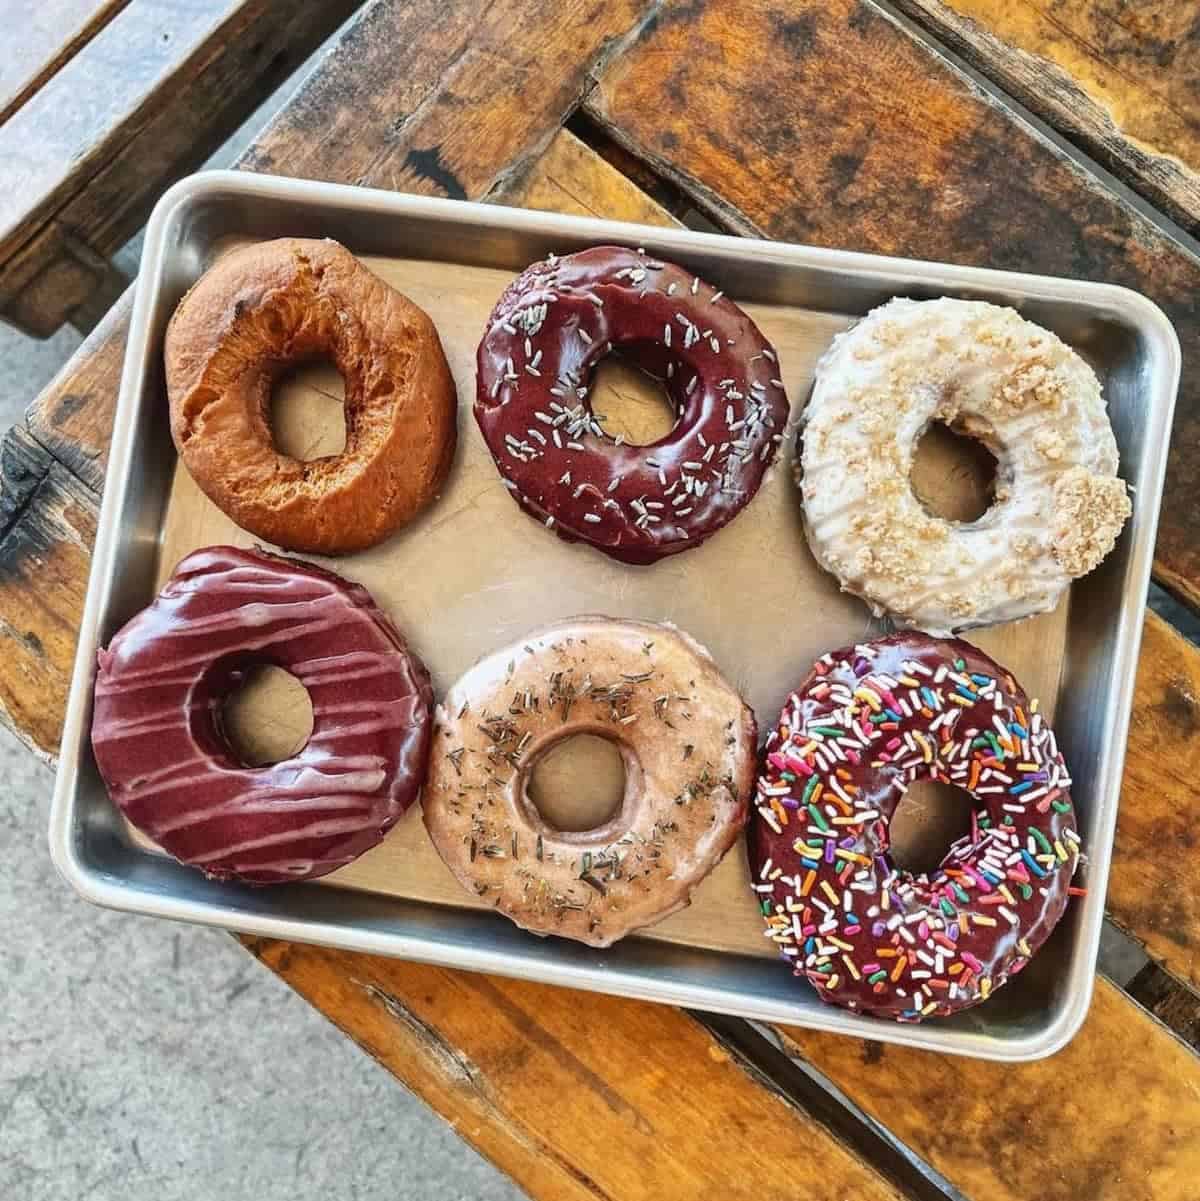 An assortment of vegan doughnuts from Vortex Doughnuts in Asheville.